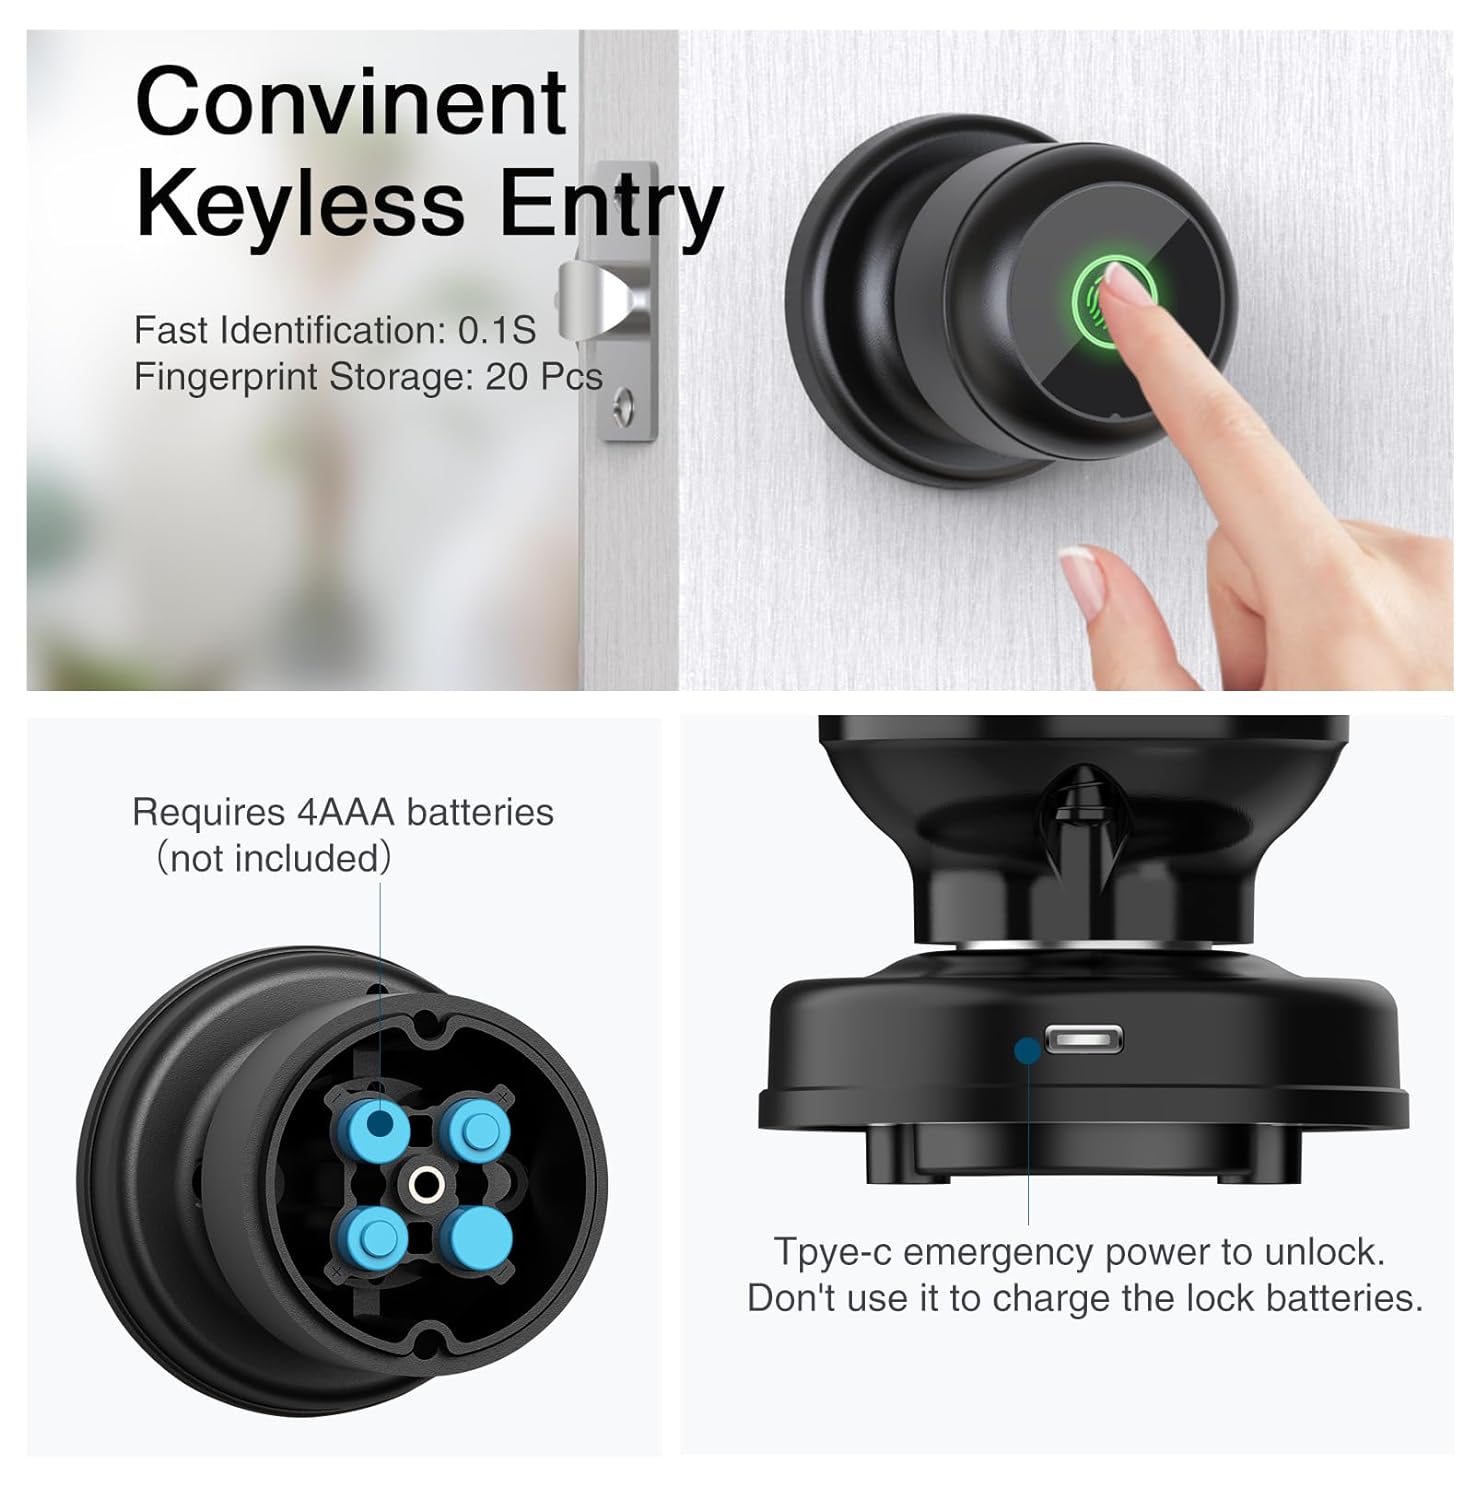 GHome Smart Door Knob Fingerprint Door Lock with App Control - Biometric Smart Lock for Home, Offices, Hotels, and Apartments